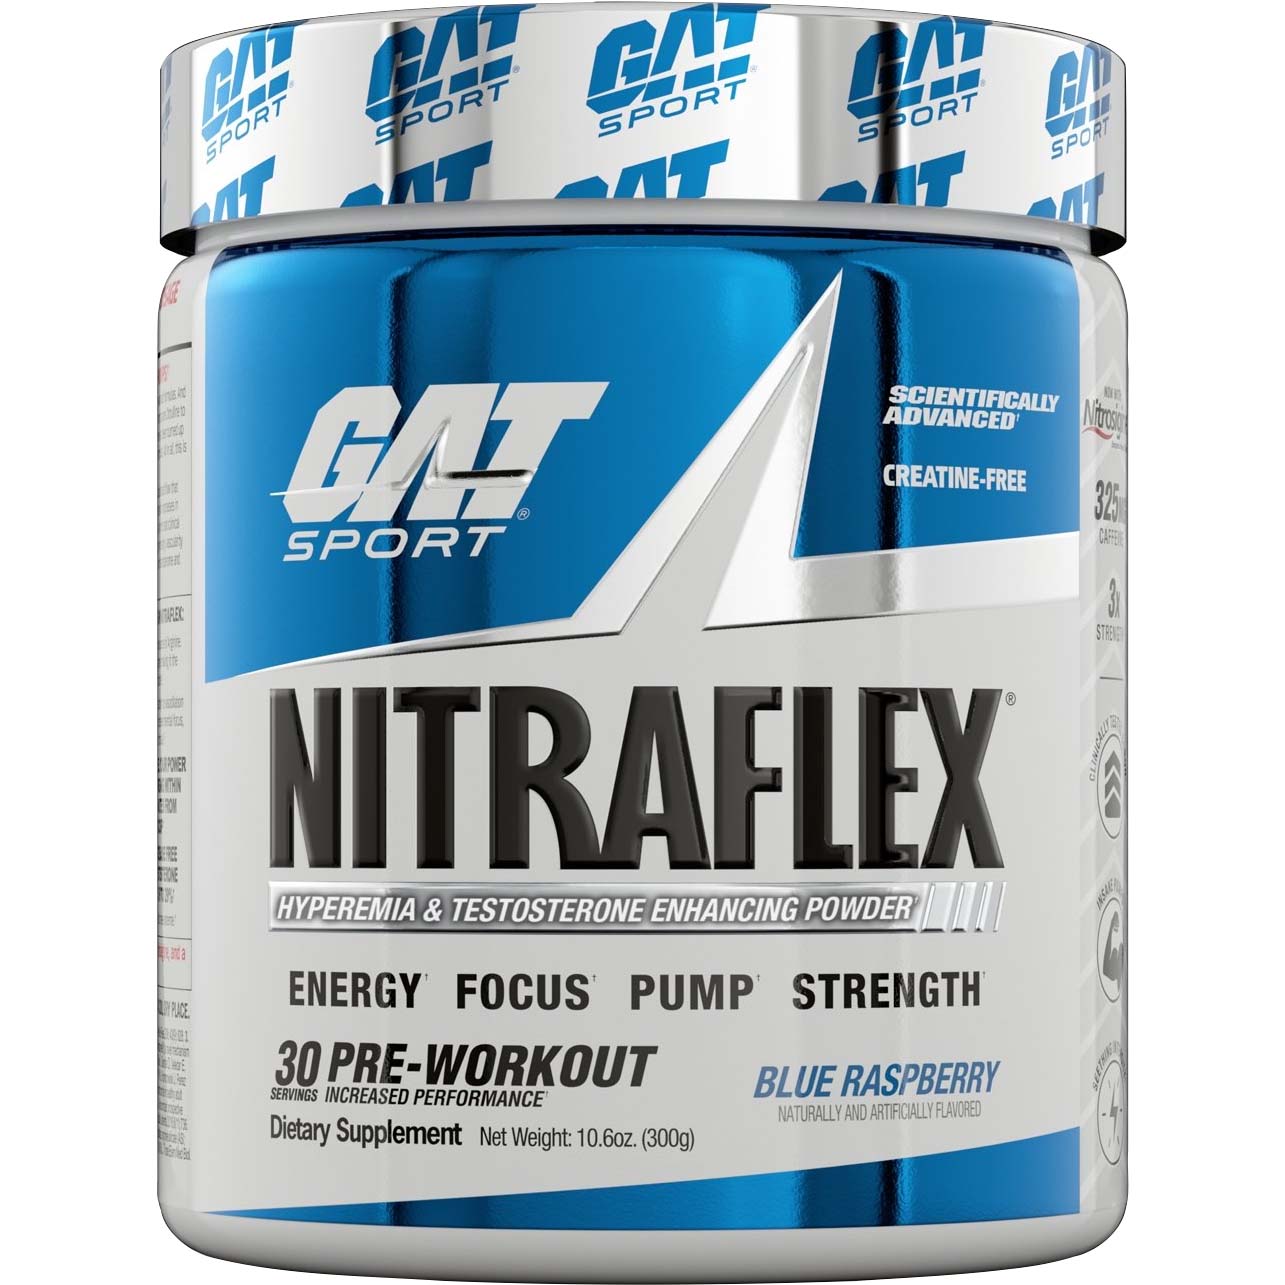 Gat Sport Nitraflex Testosterone Boosting Powder, Blue Raspberry, 30